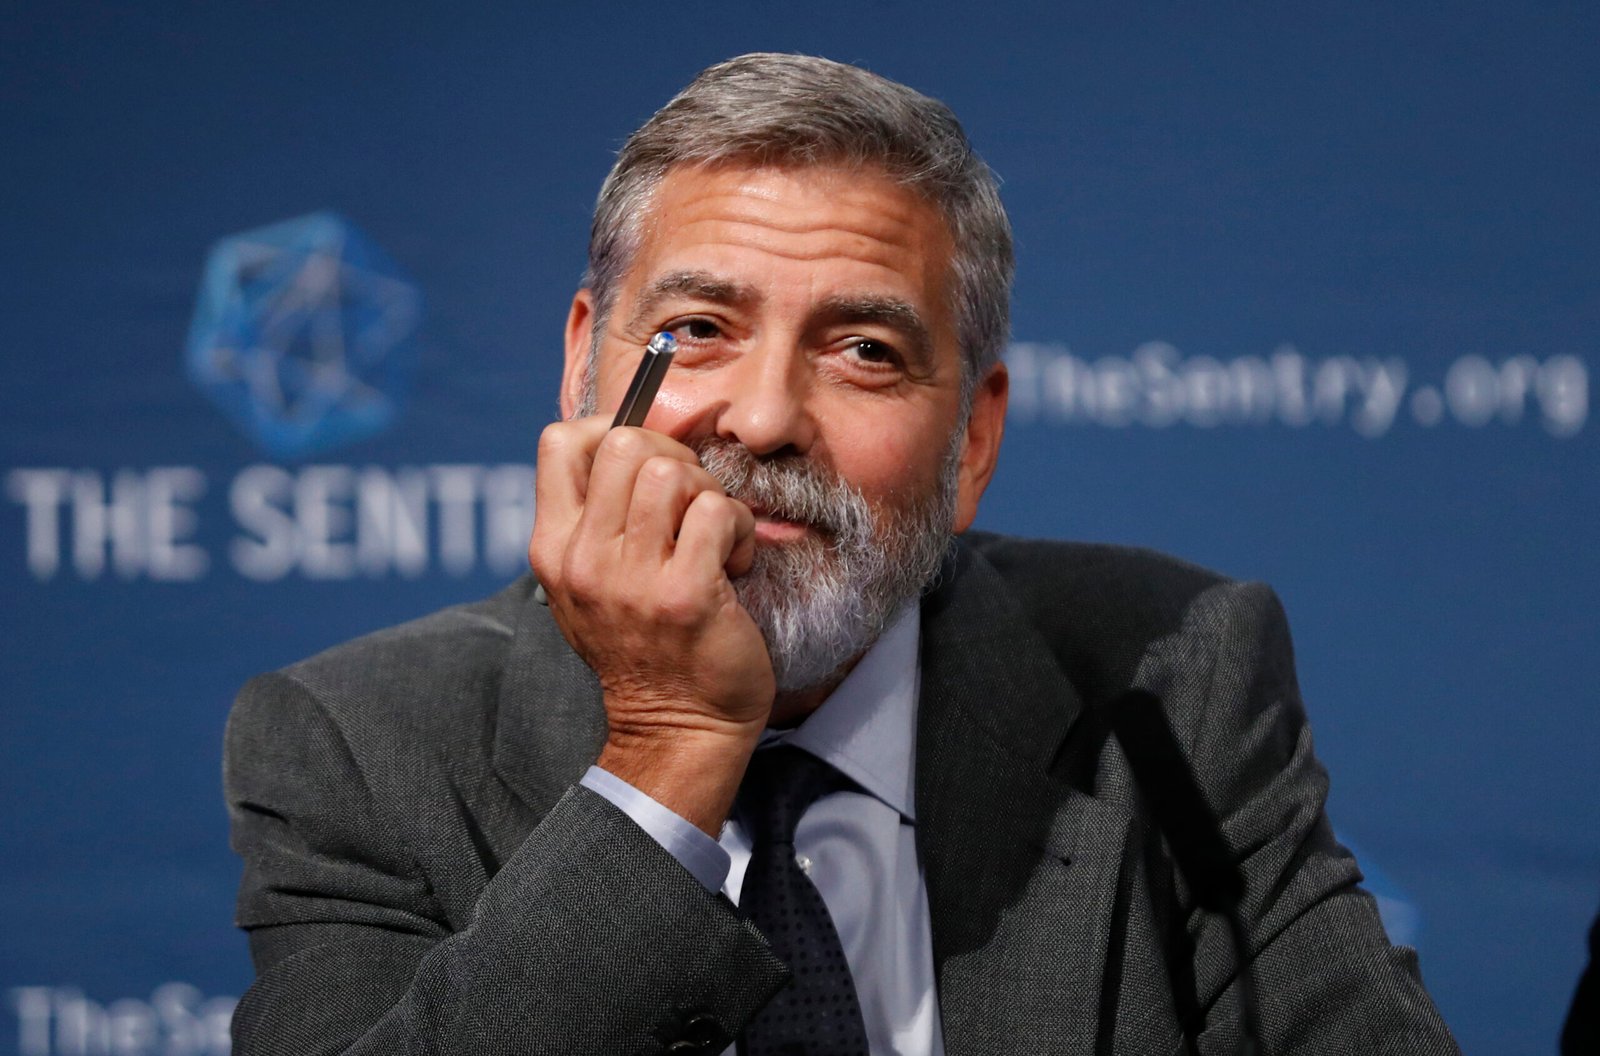 George Clooney has no plans to enter politics